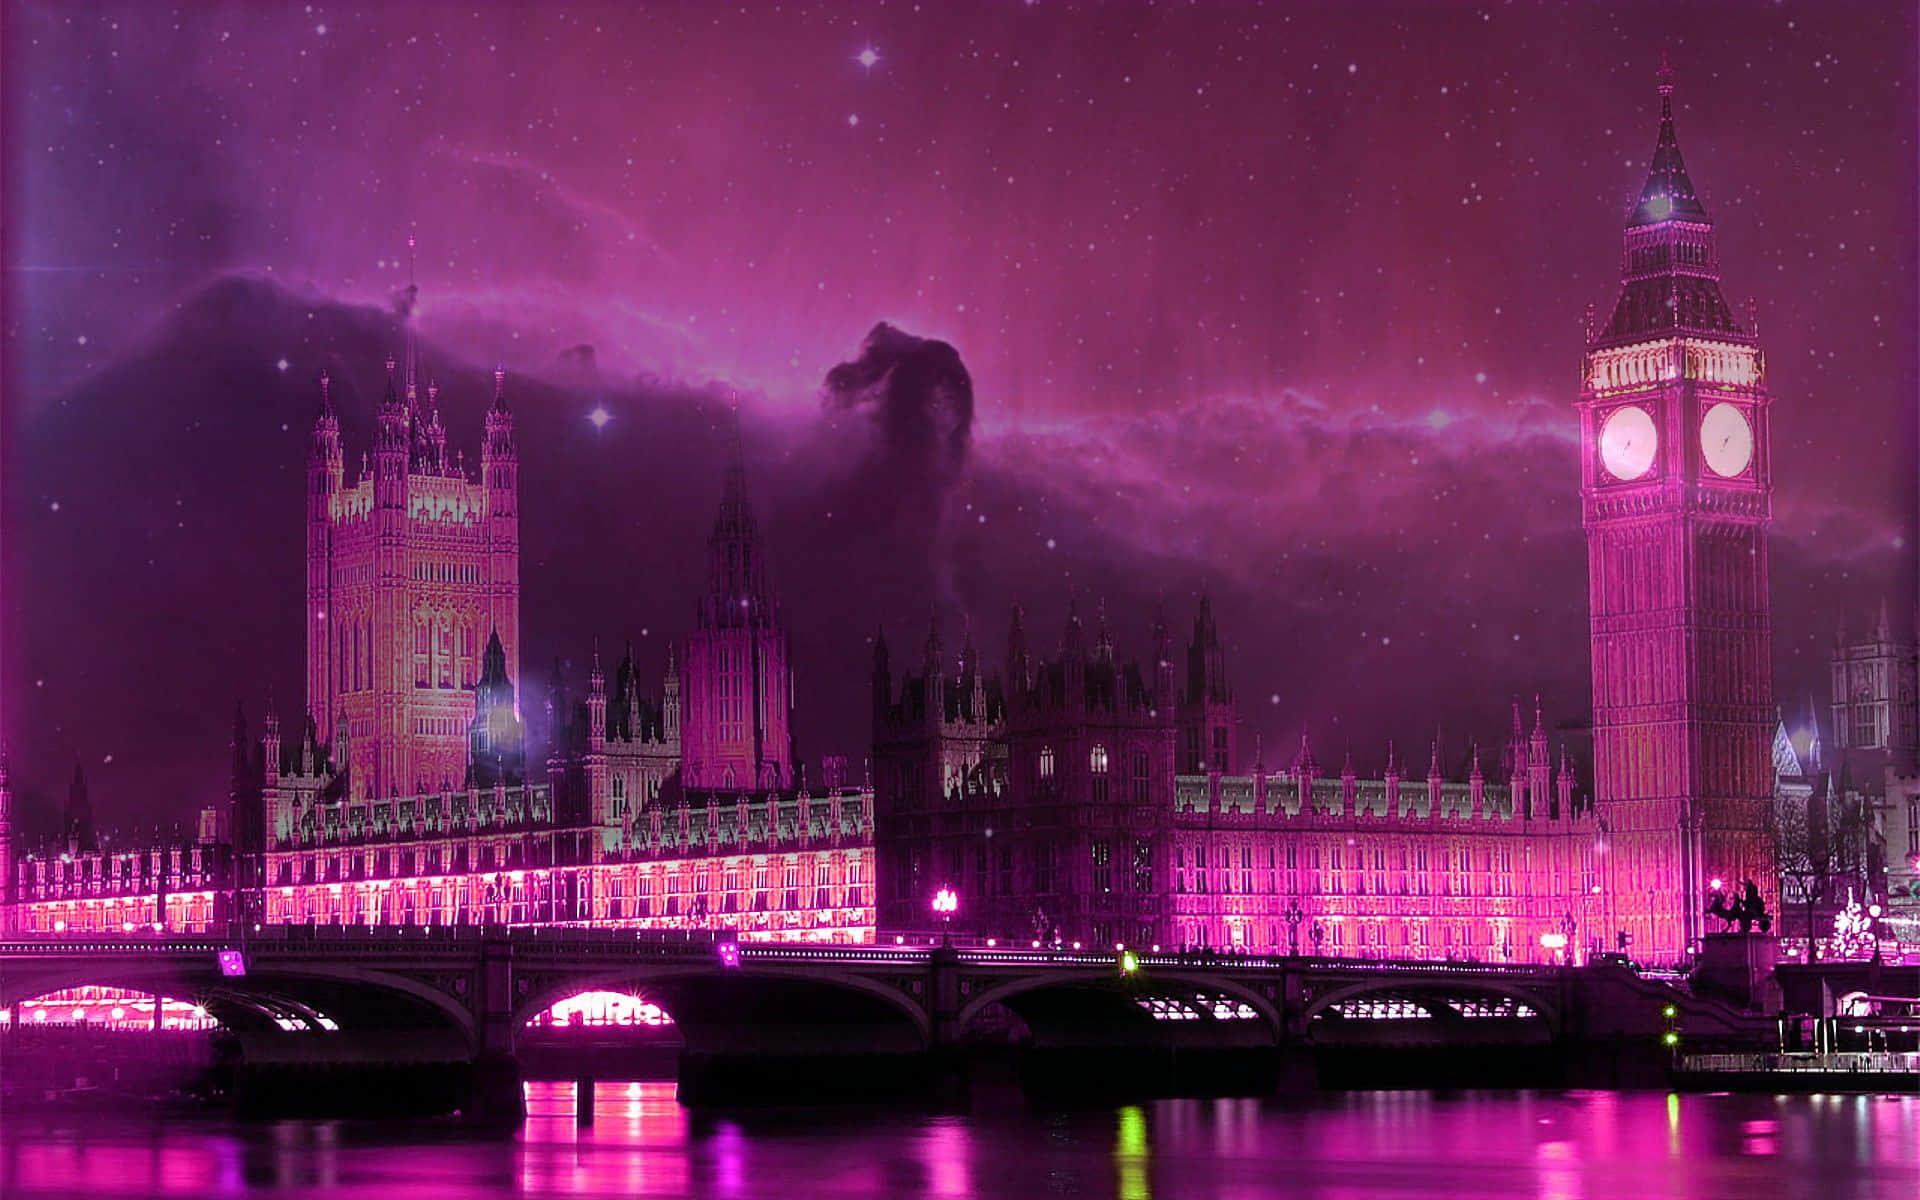 London Bridge, Great Bell Desktop Pink Aesthetic Wallpaper